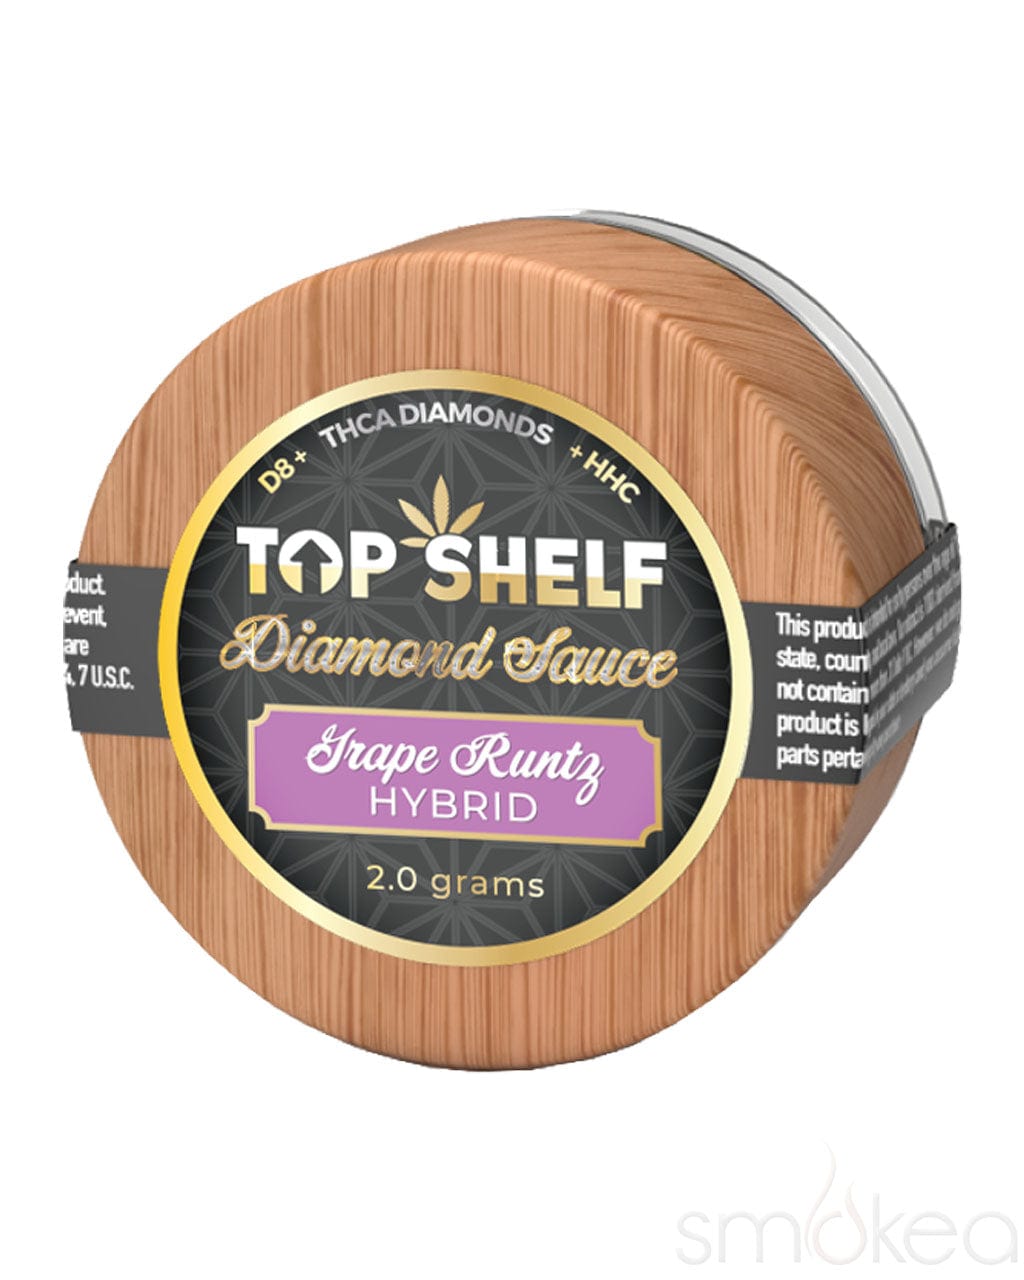 Top Shelf Hemp 2g THCA Diamond Sauce - Grape Runtz